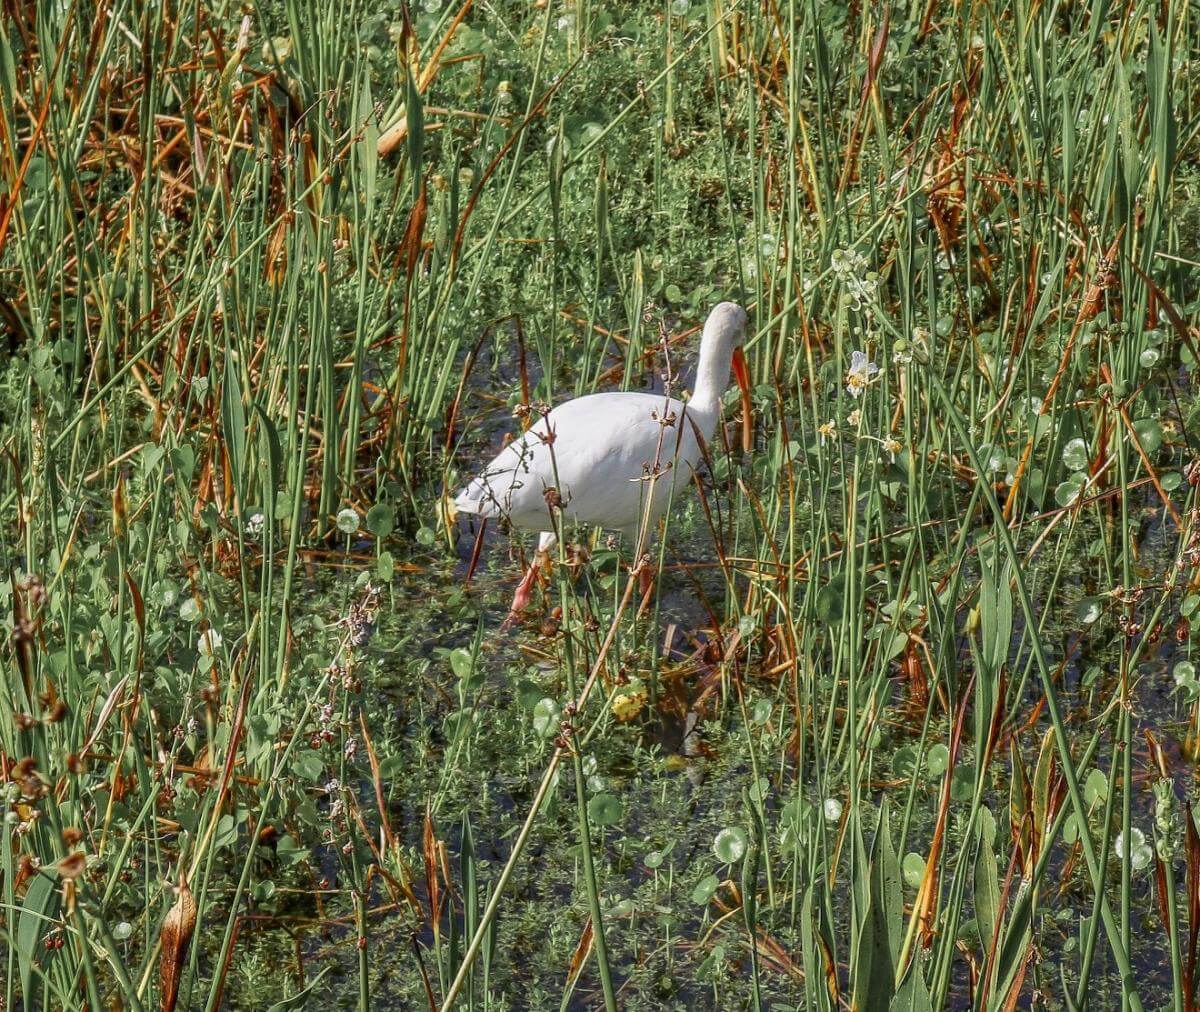 A white bird in a marsh